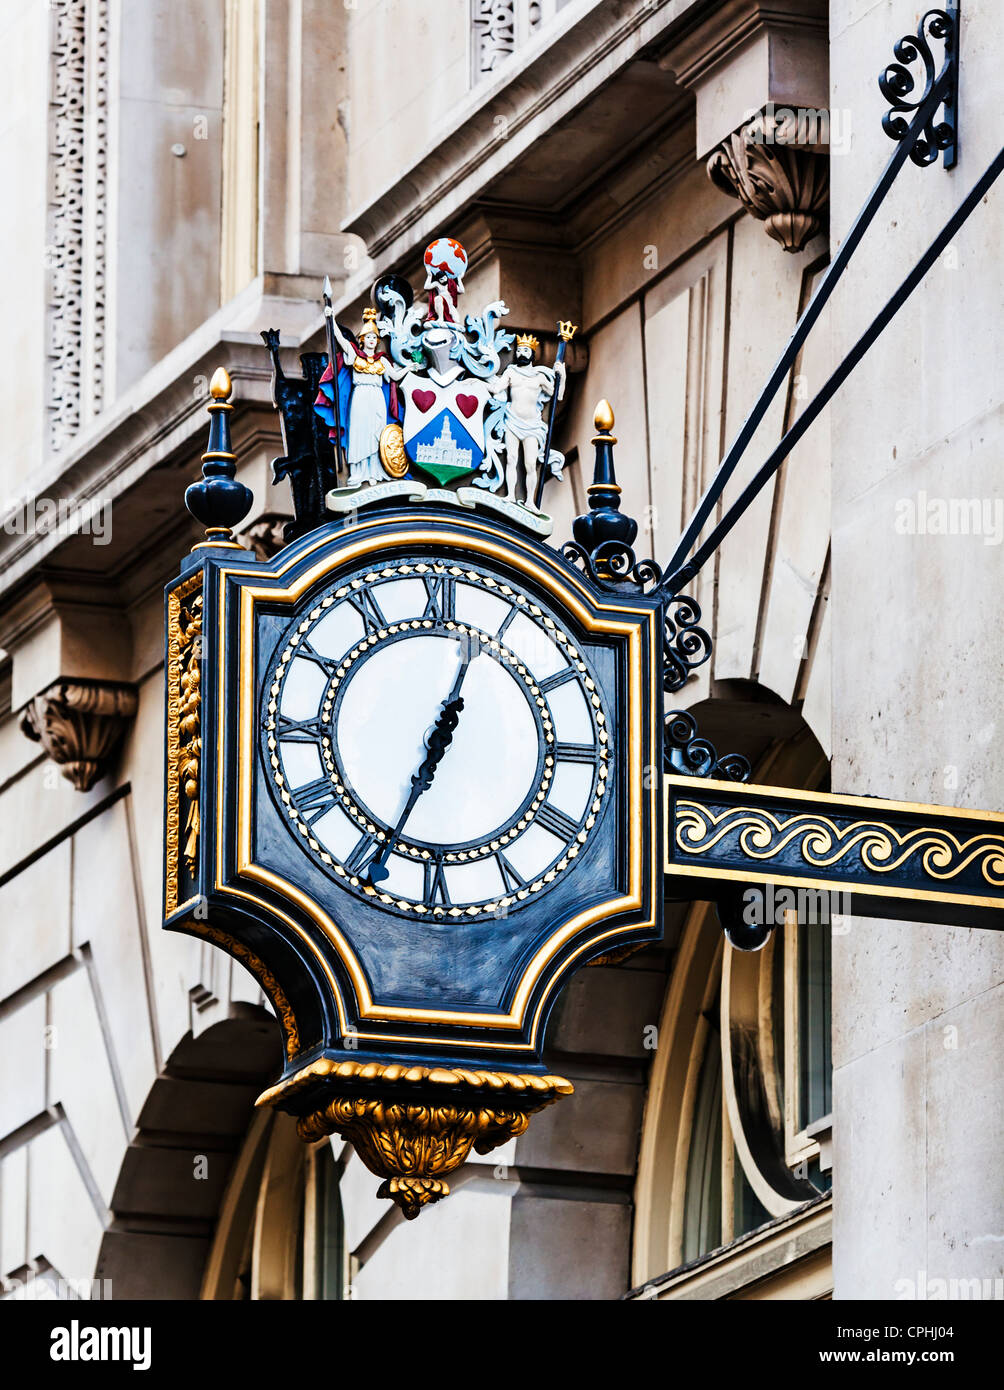 Old Victorian public clock, City of London, England. Stock Photo